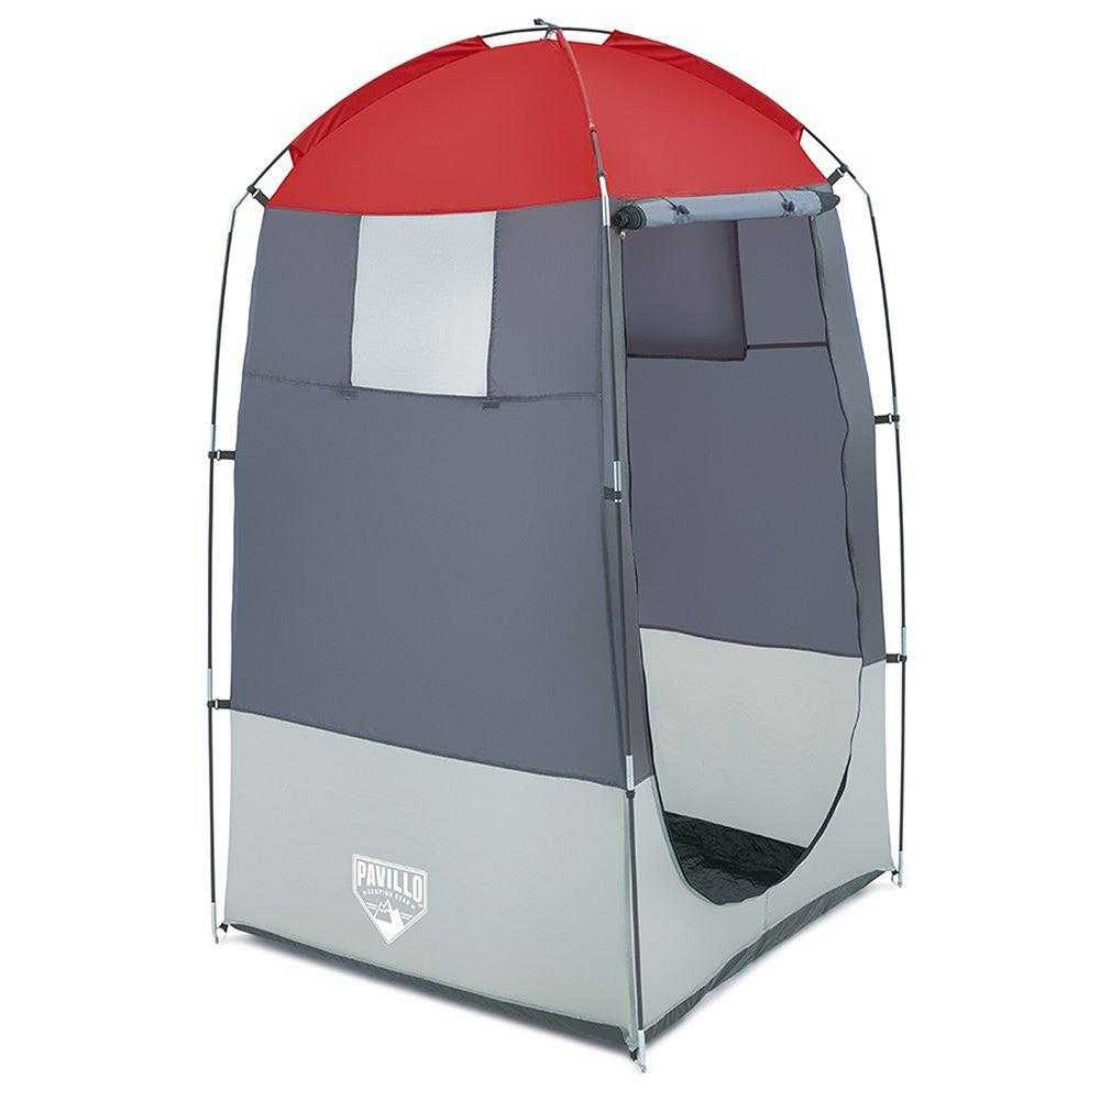 Bestway Camping Toilet Shower Tent